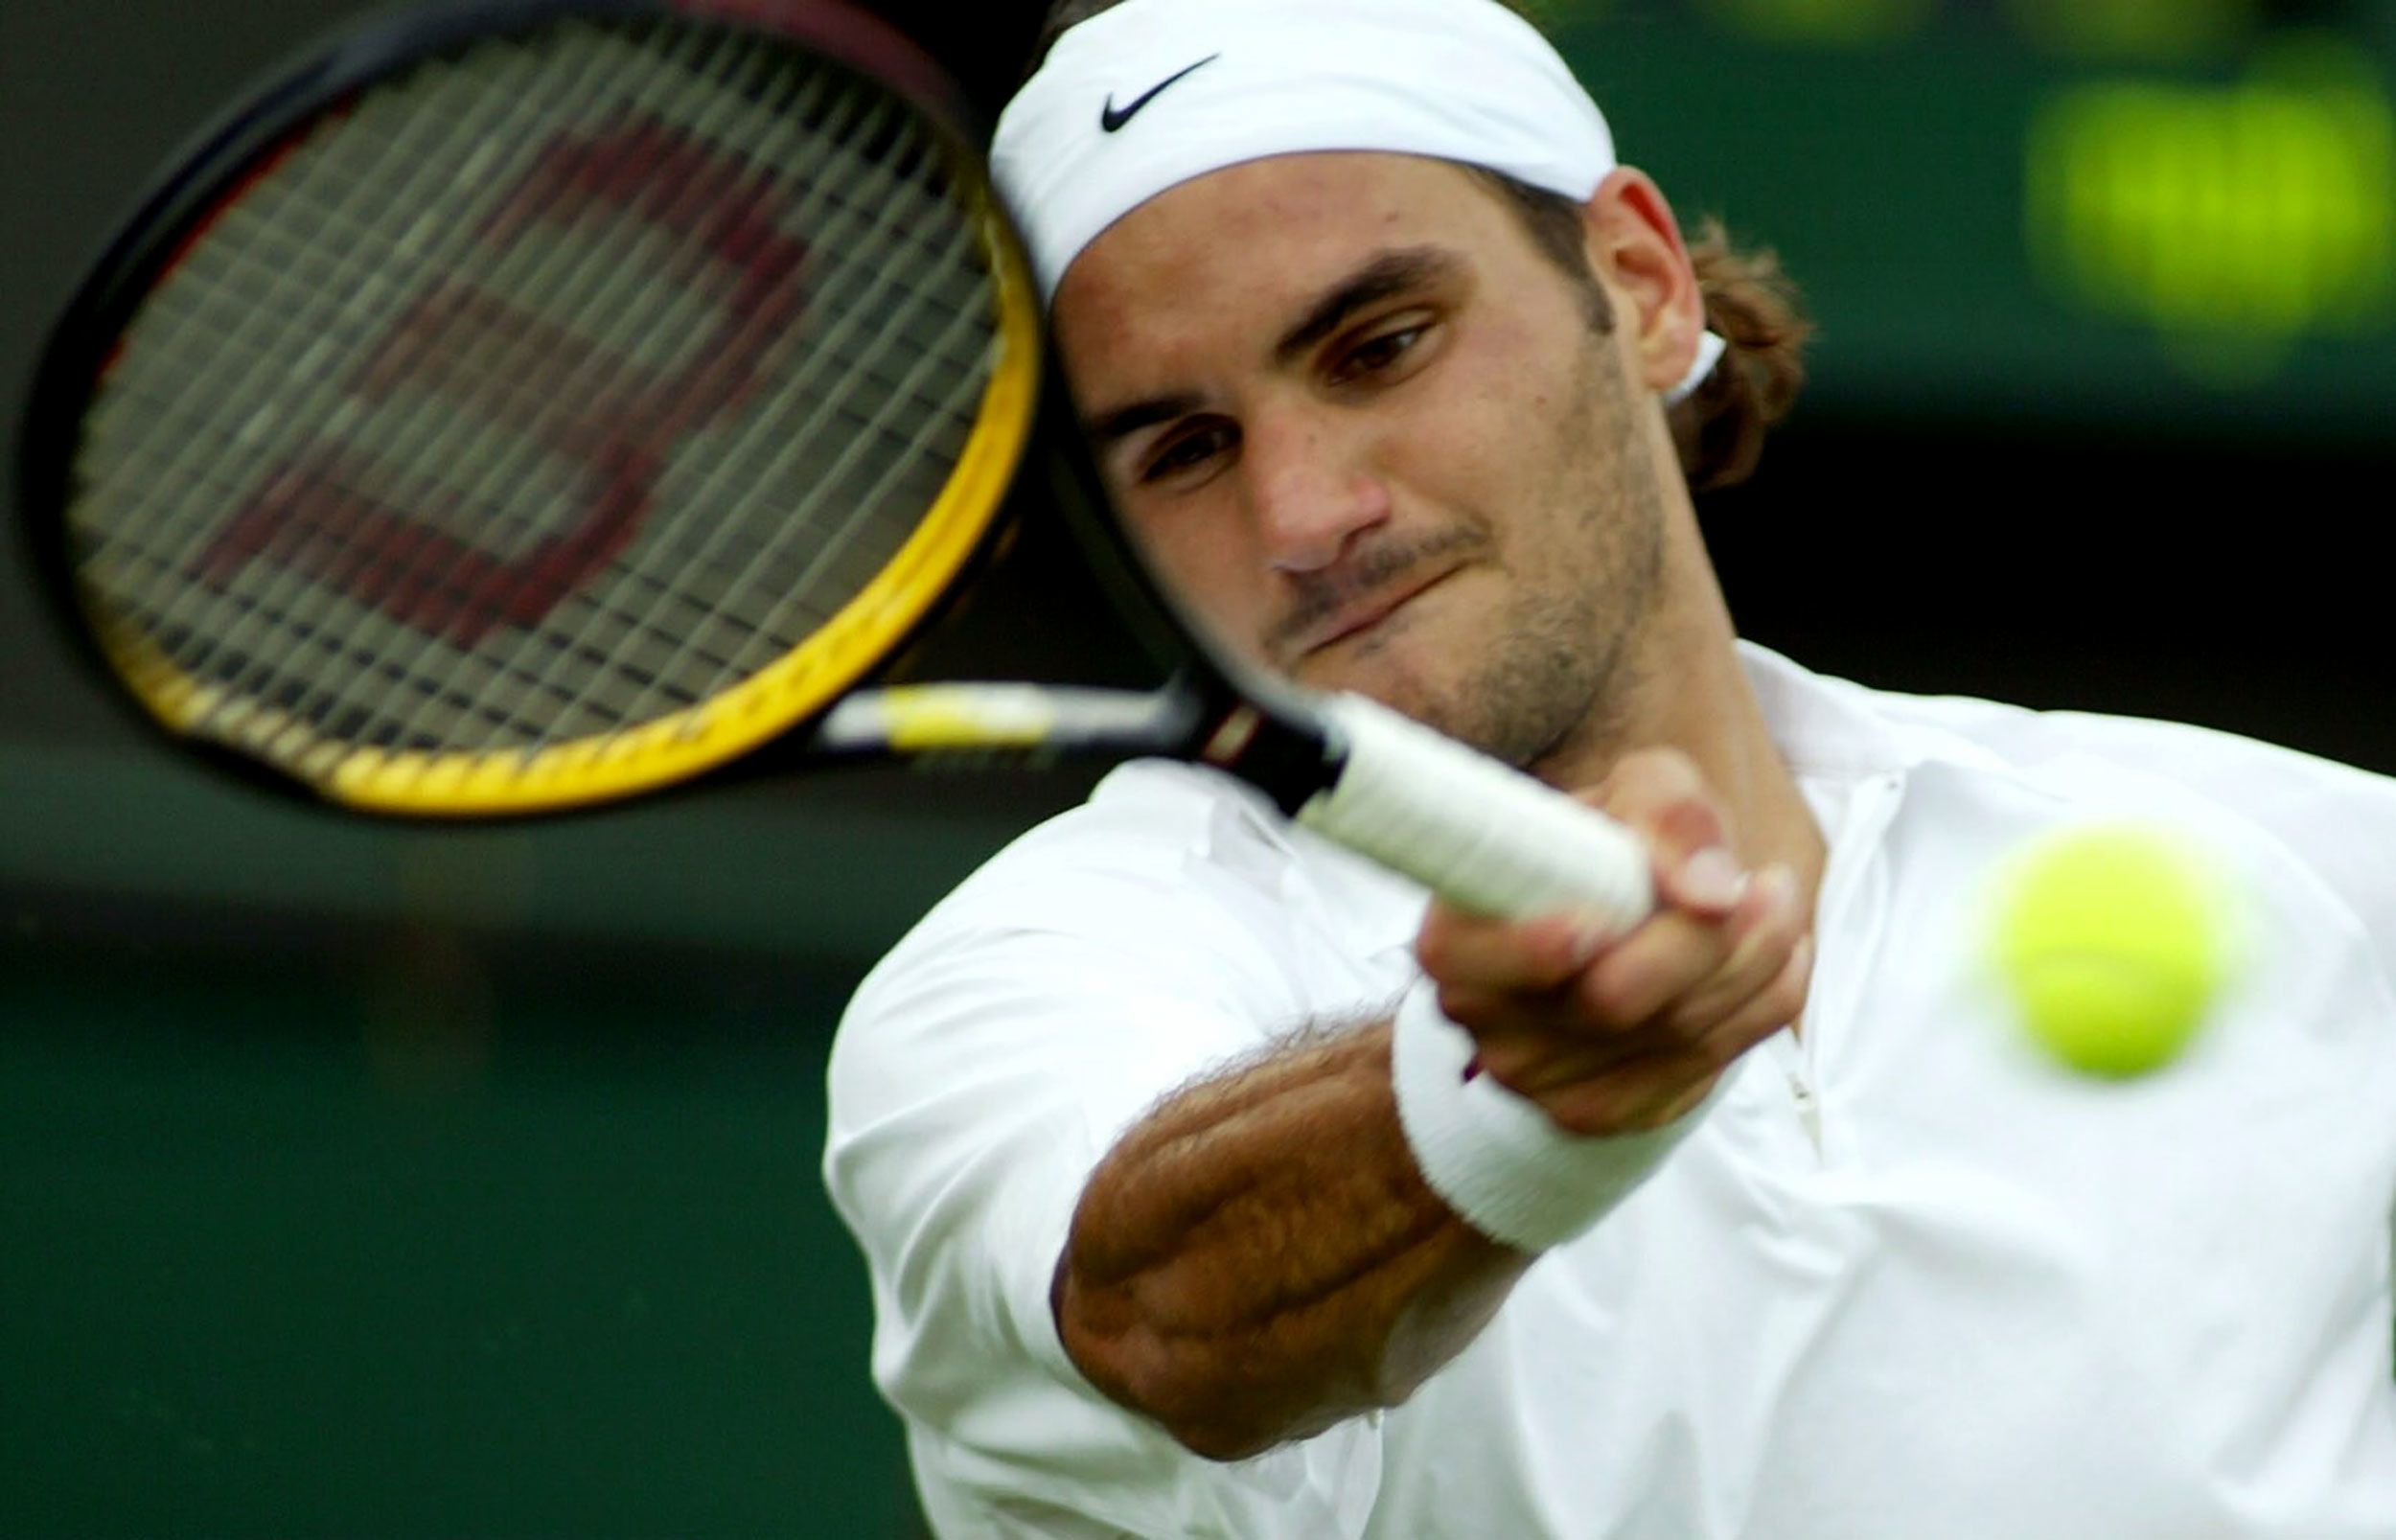 Tennis great Roger Federer